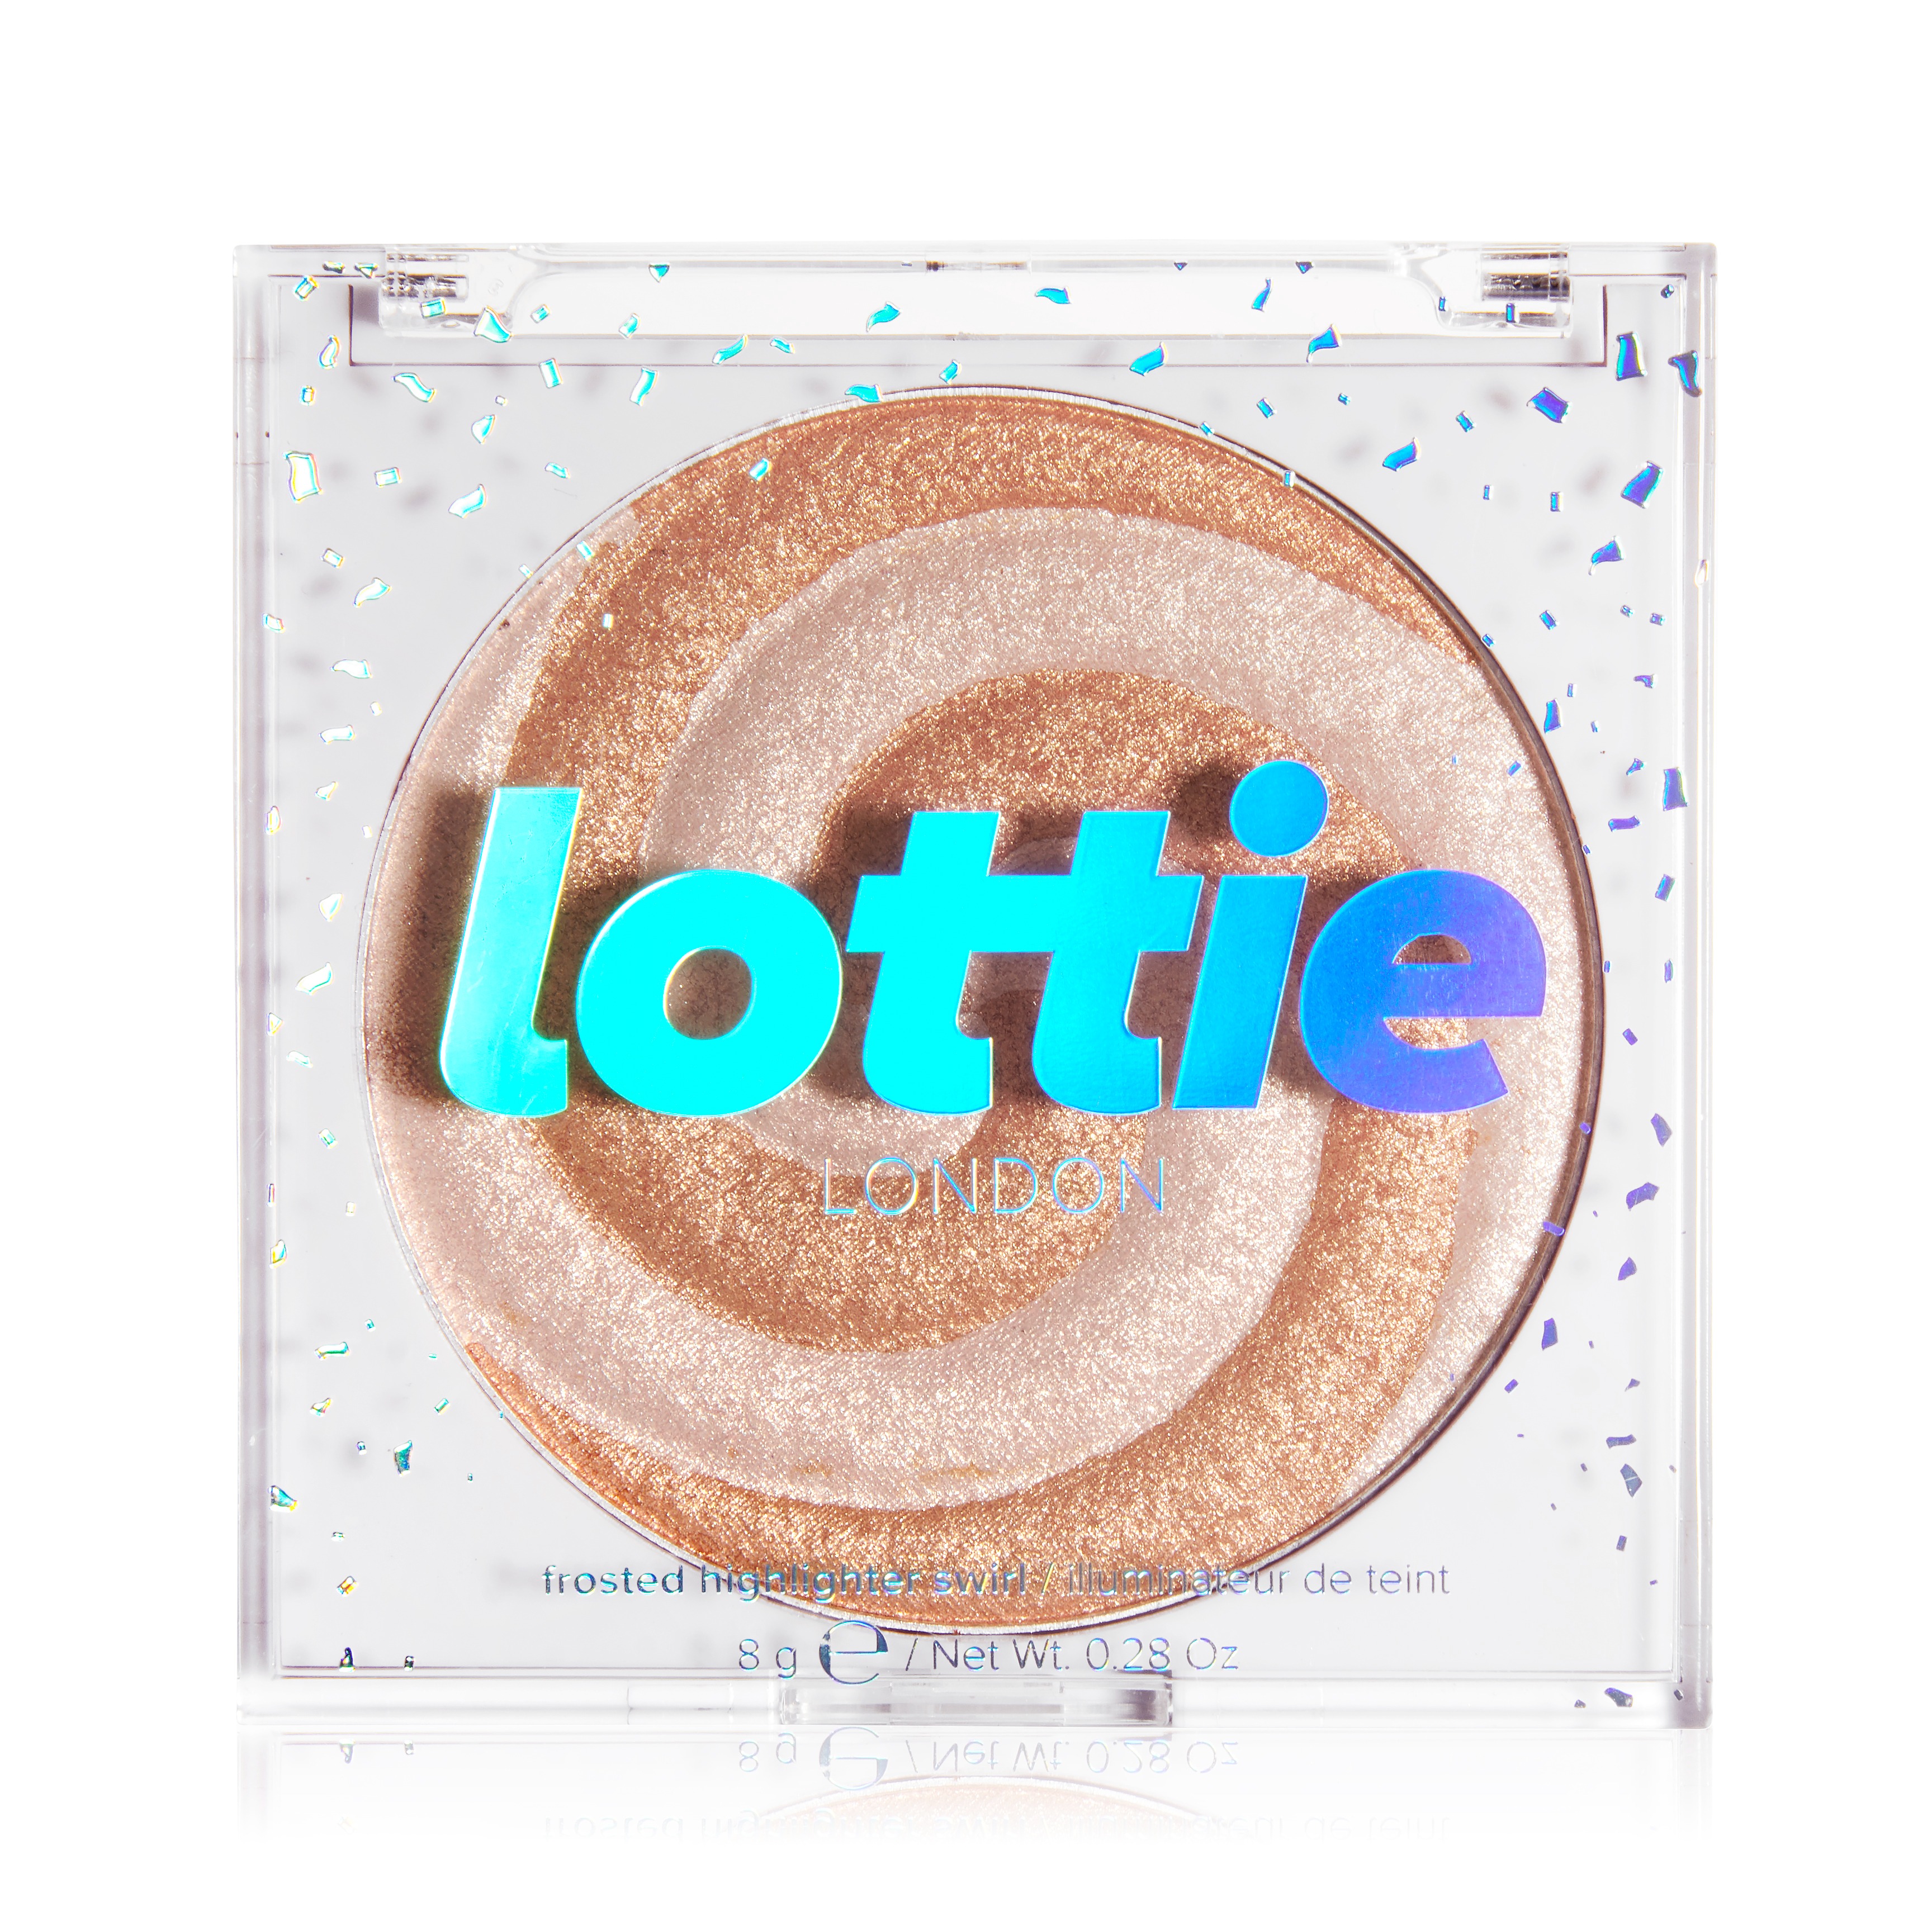 Lottie London Frosted Highlighter Swirl, Cinnamon Bun, 0.3 oz - image 1 of 6